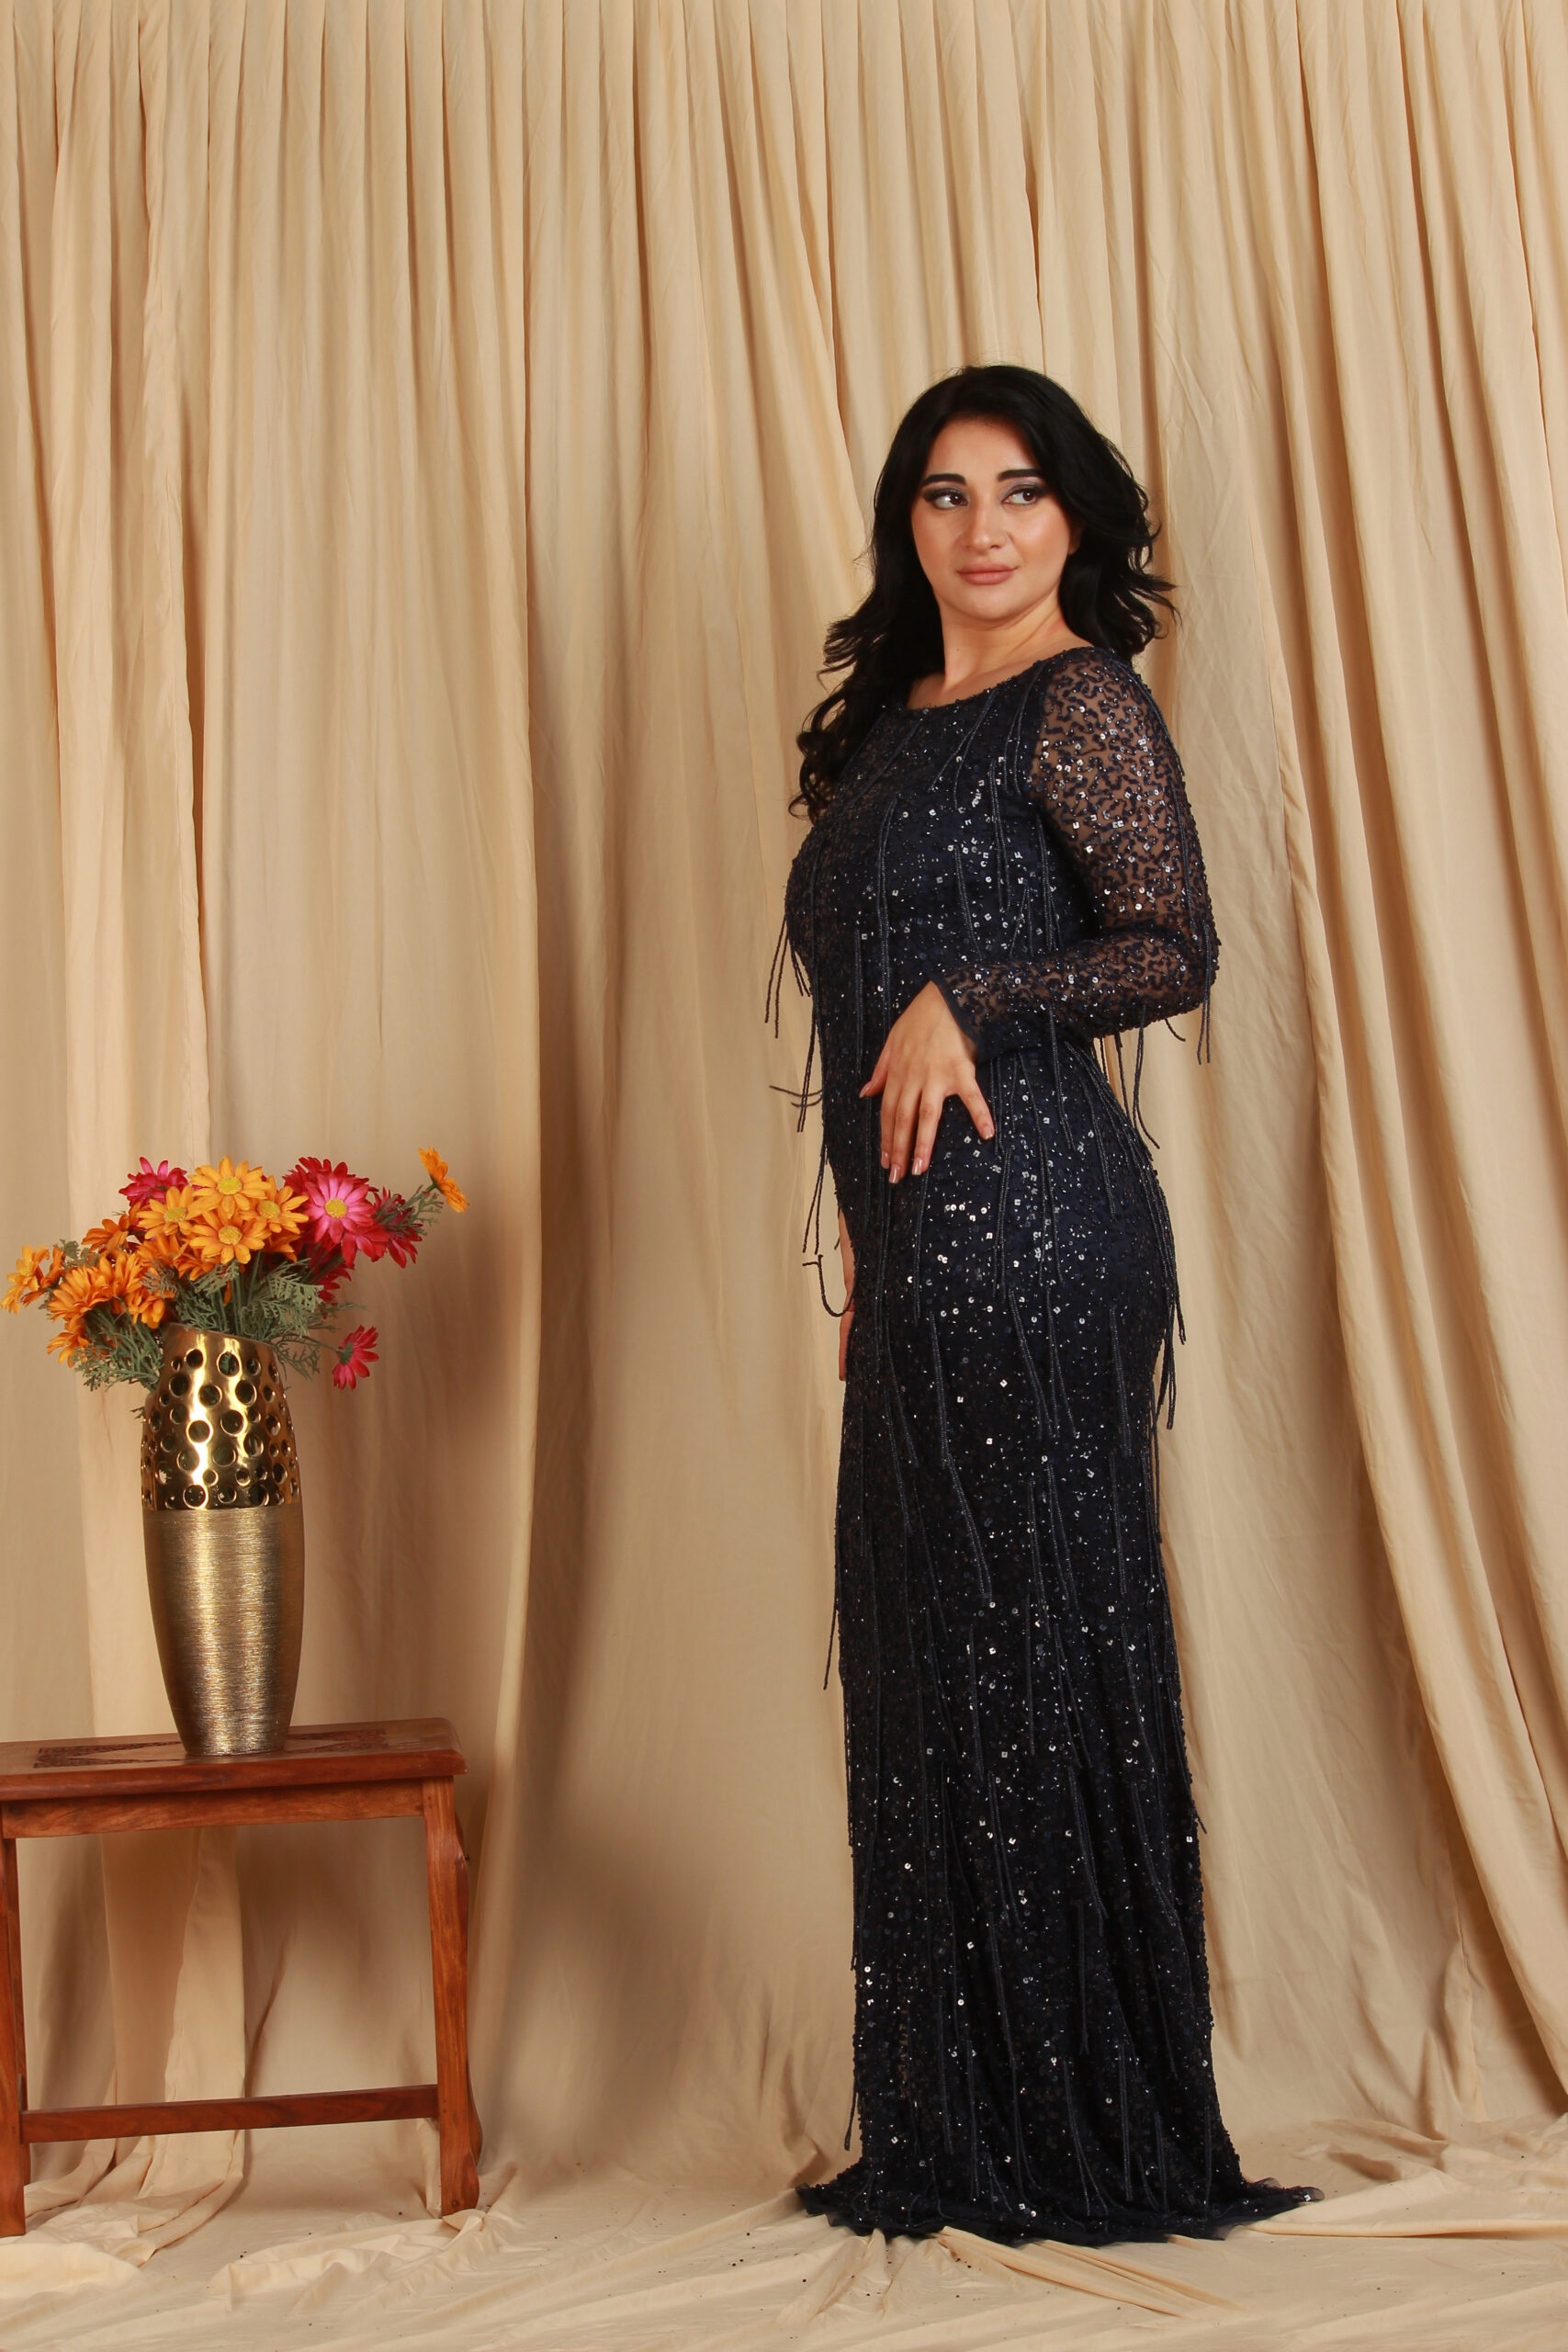 Shanaya Kapoor Adds Sparkle to The Night in Sheer Black Dress